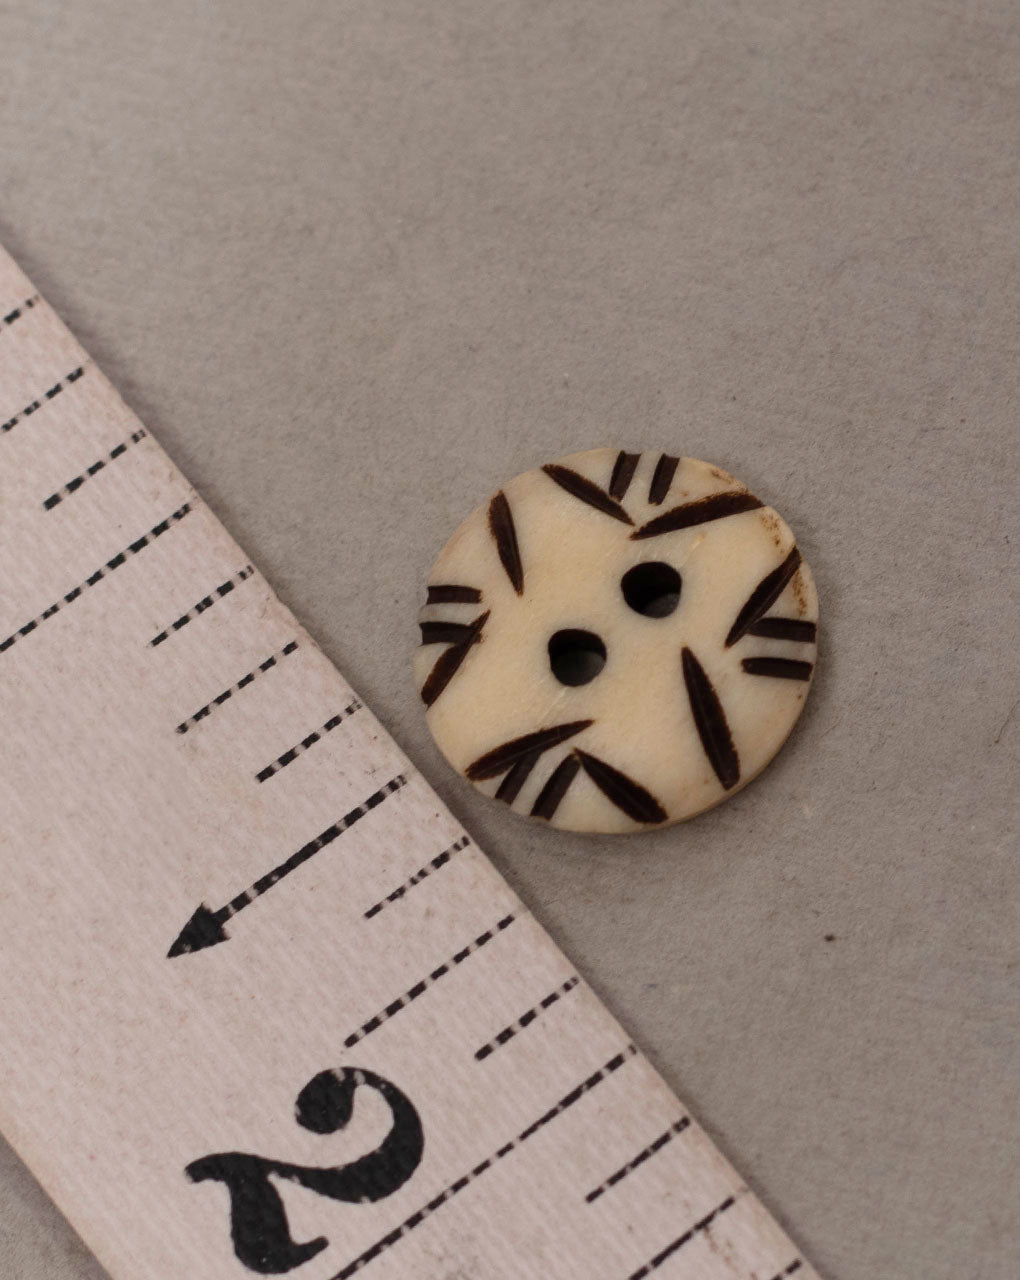 Engraved Bone Buttons ( Set Of 6 ) - Fabriclore.com